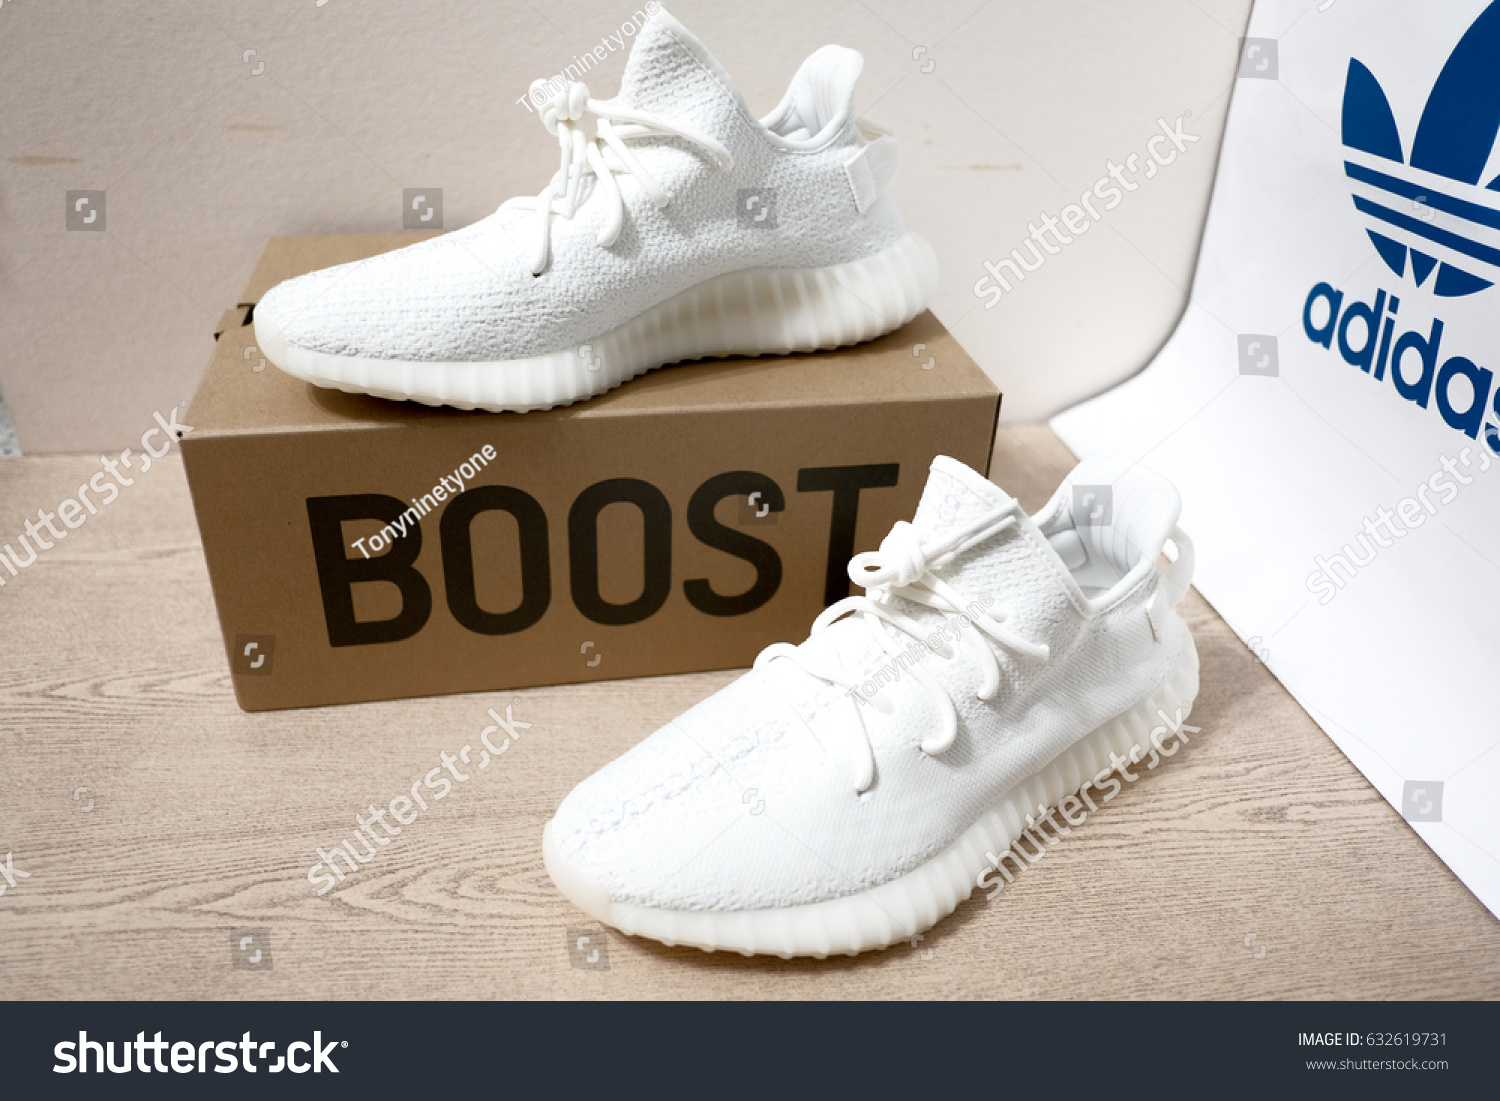 Adidas Yeezy Boost 350 V2 Stock Photo 